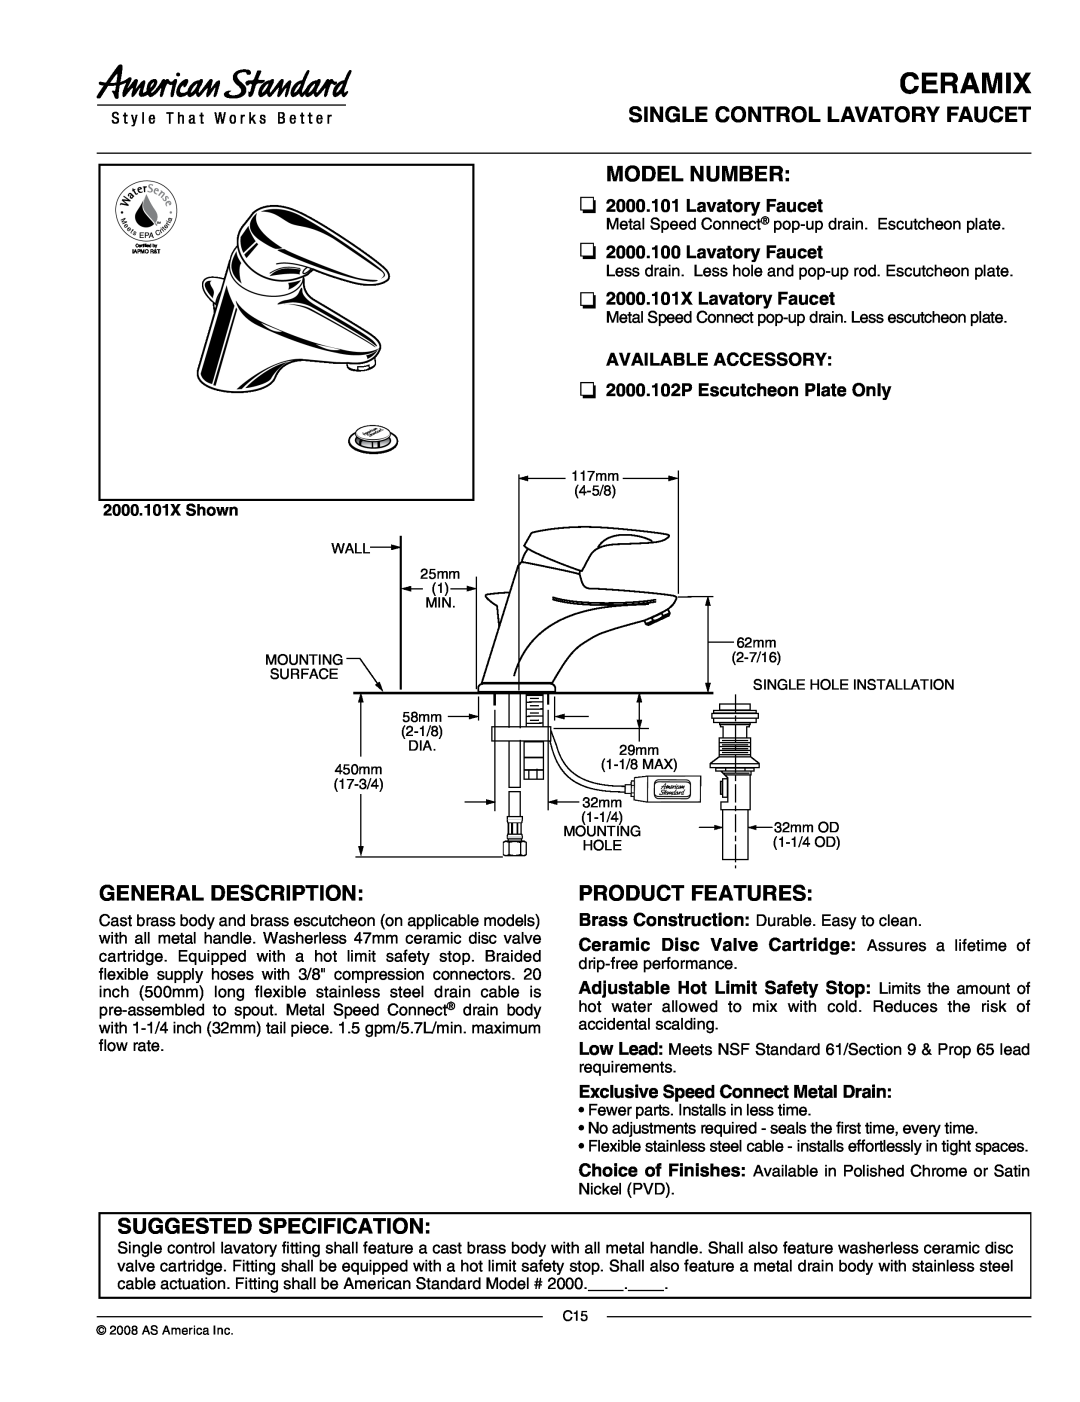 American Standard 2000.101 specifications Ceramix, Single Control Lavatory Faucet, Model Number, General Description 